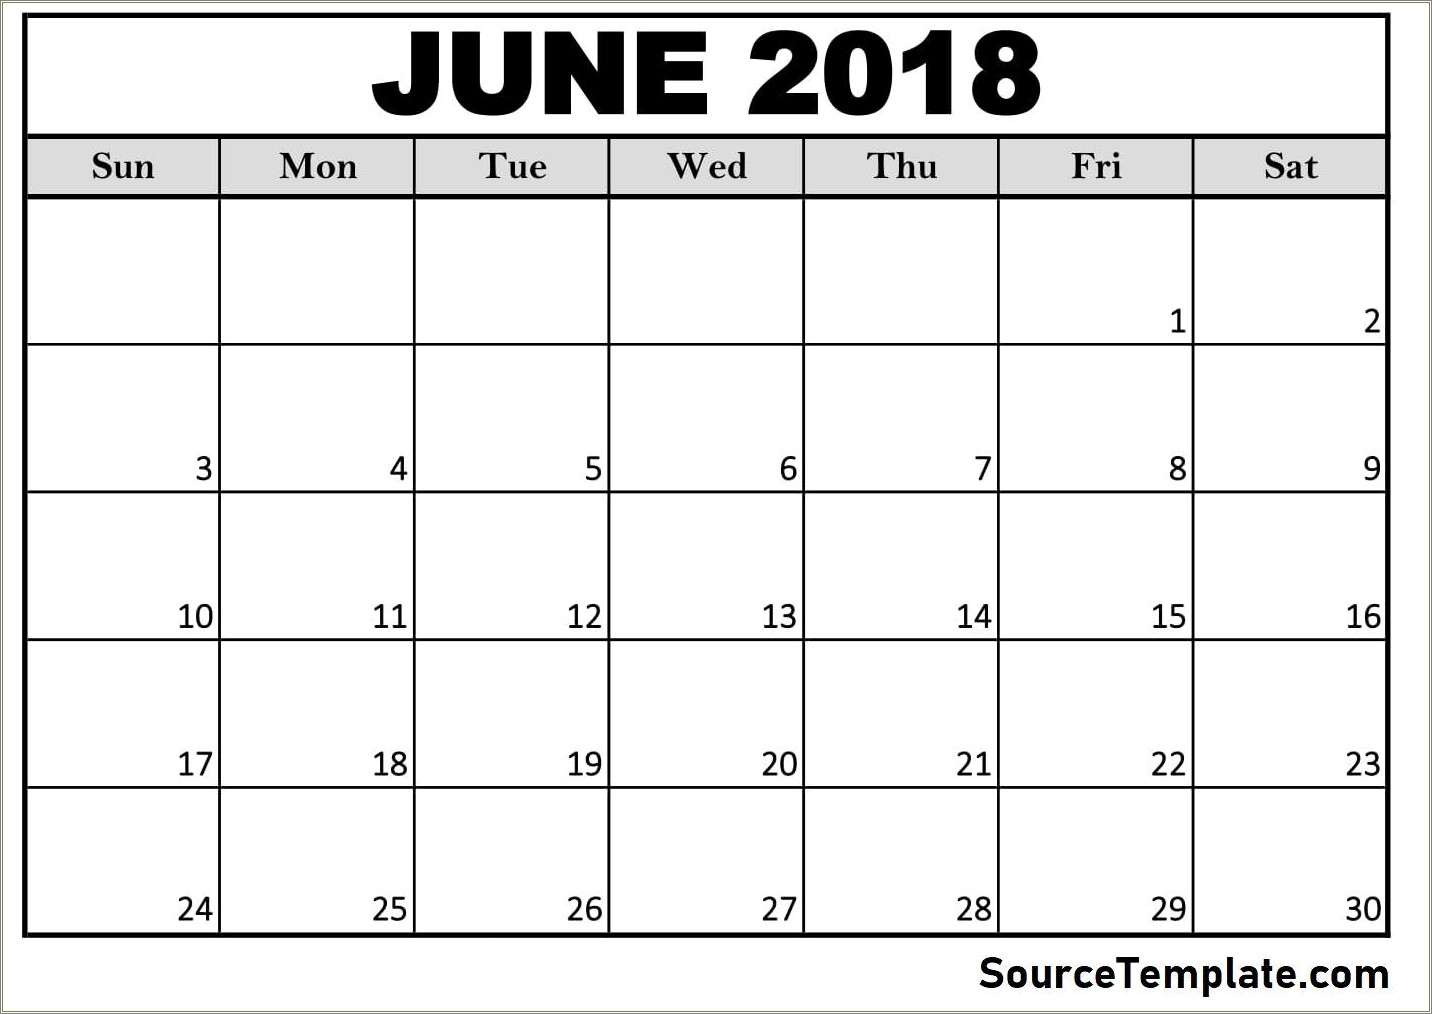 Free Monthly Calendar Template June 2018